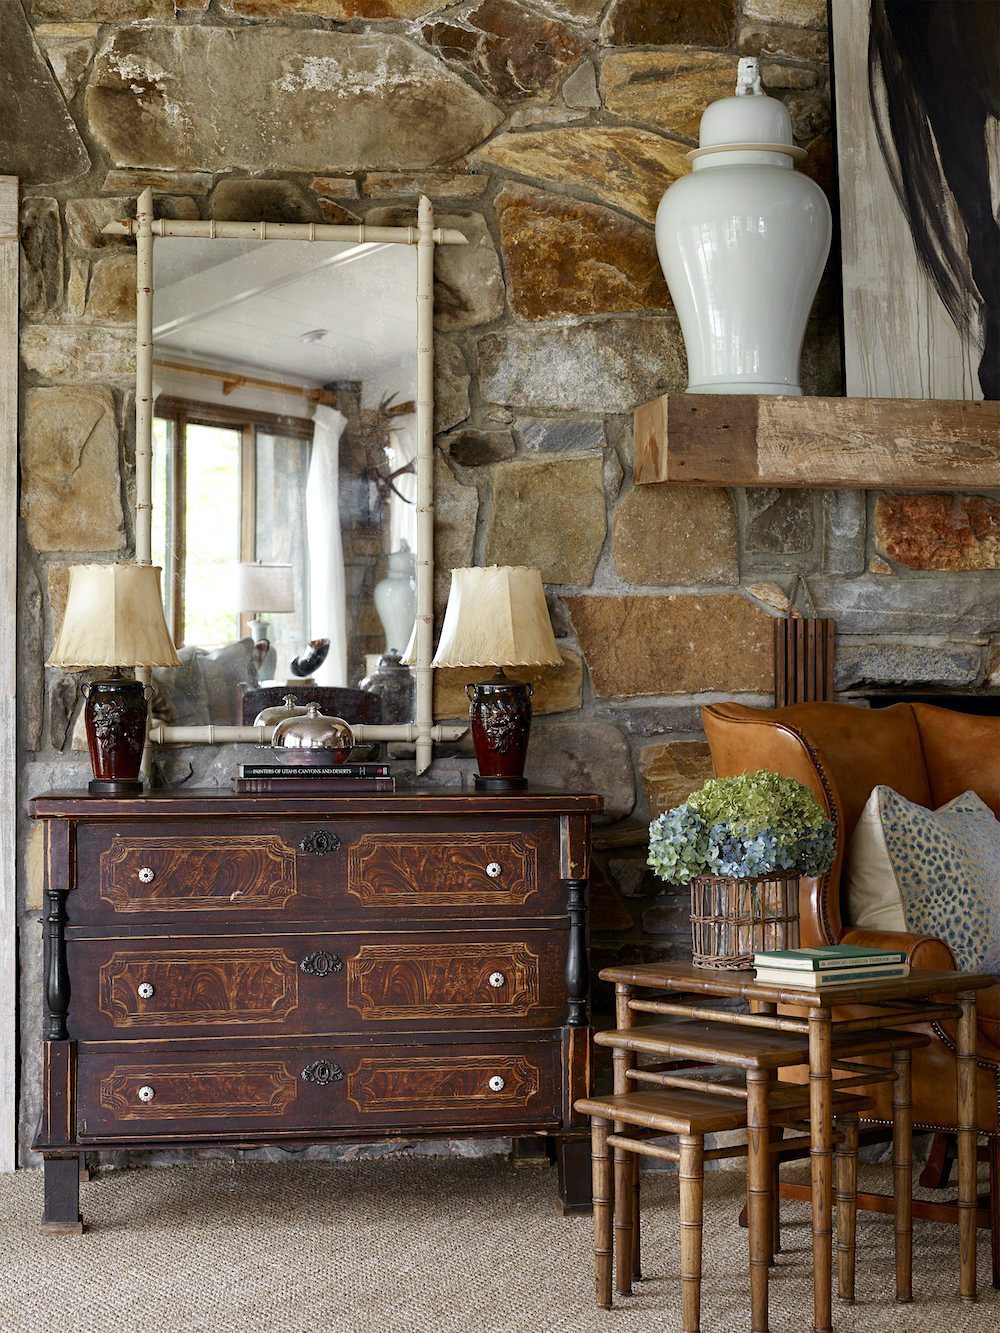 James Farmer vignette log cabin showhouse - rustic decor